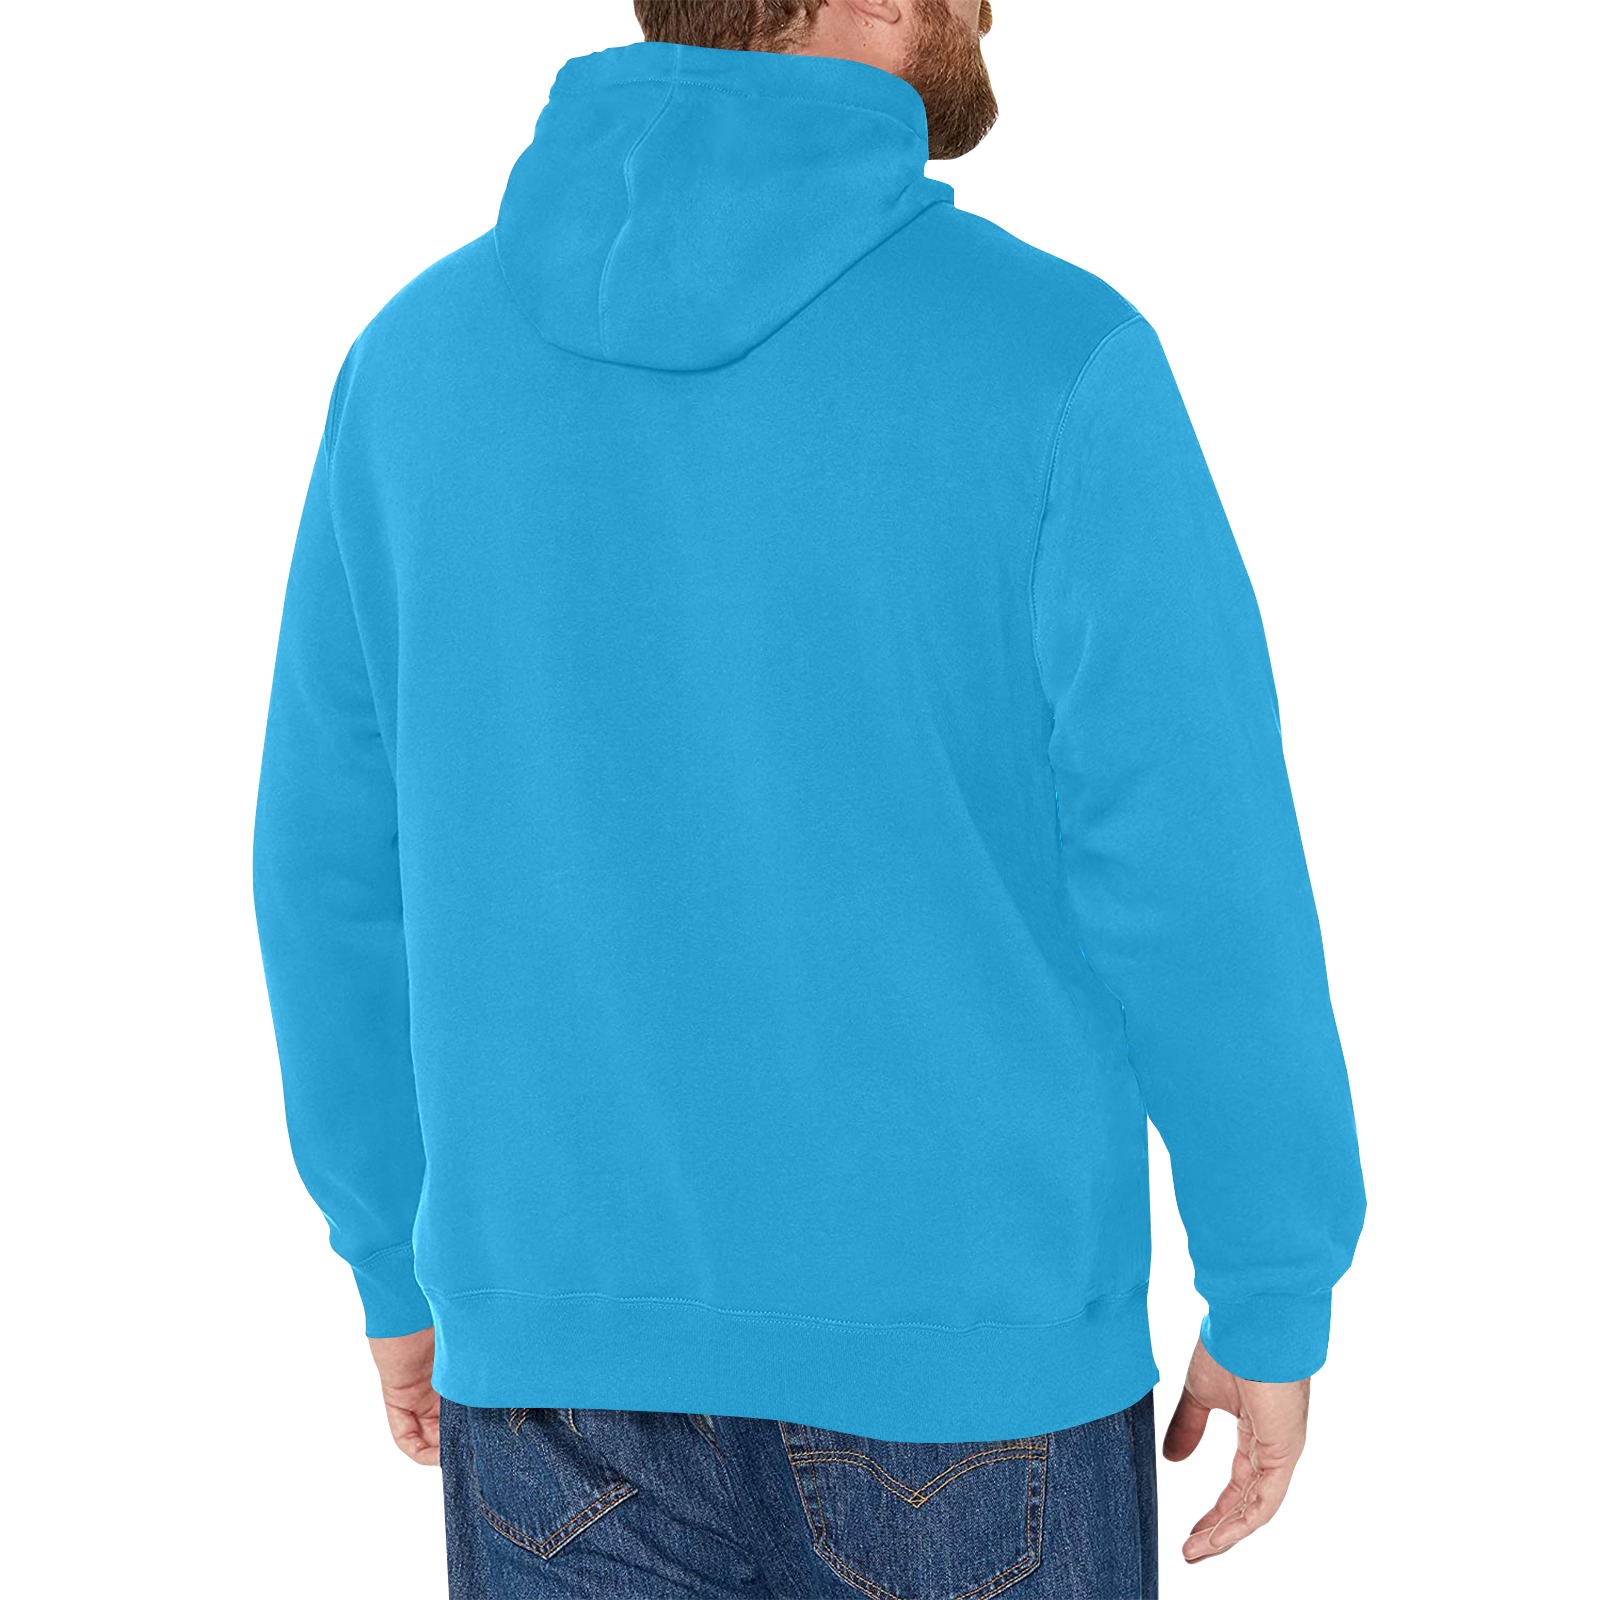 Blue Turquoise Men's Fleece Hoodie w/ White Lining Hood (Model H55)